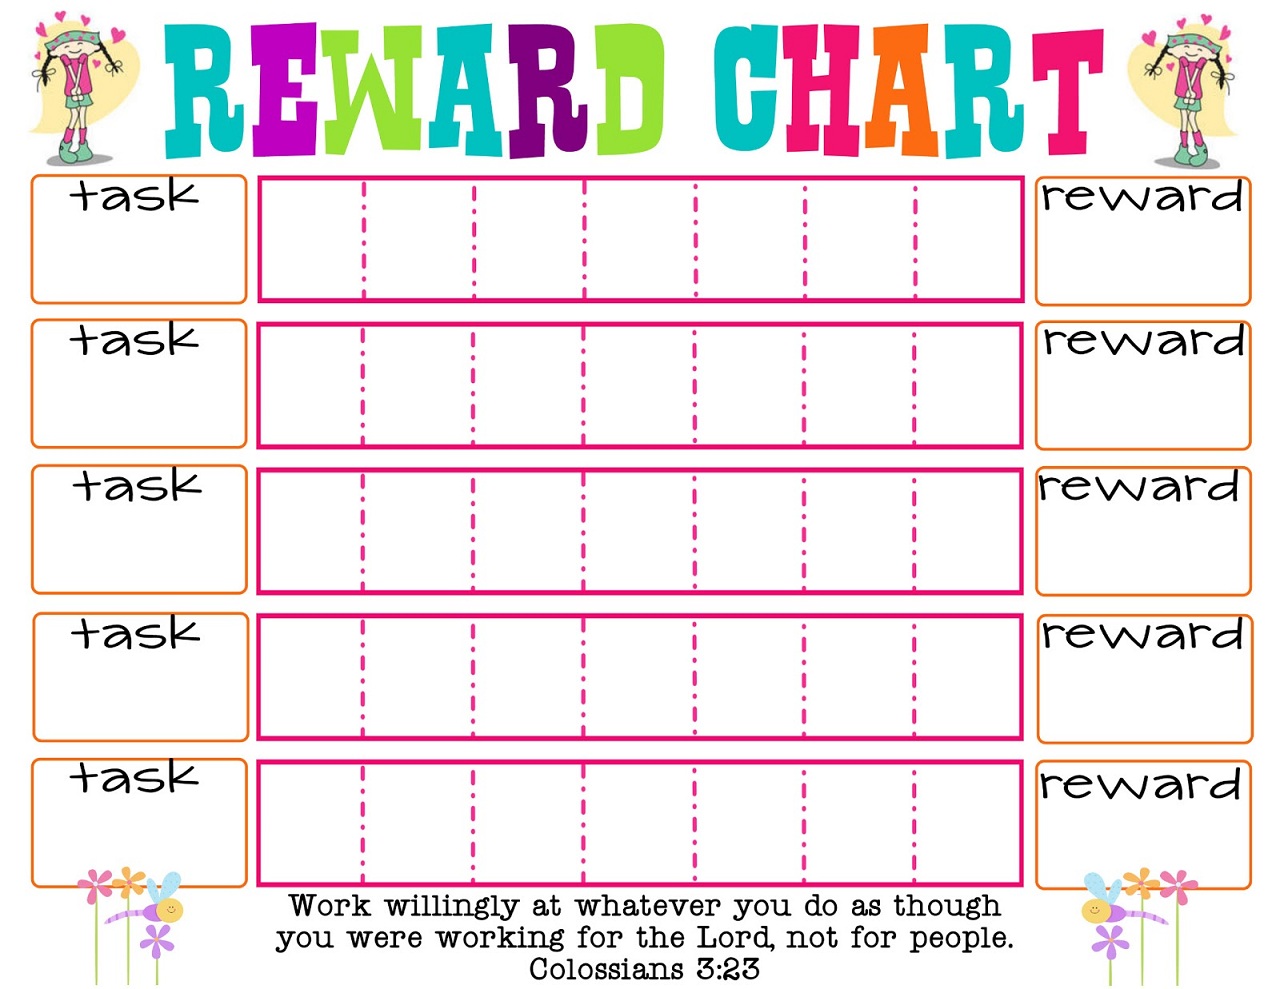 printable reward charts for kids